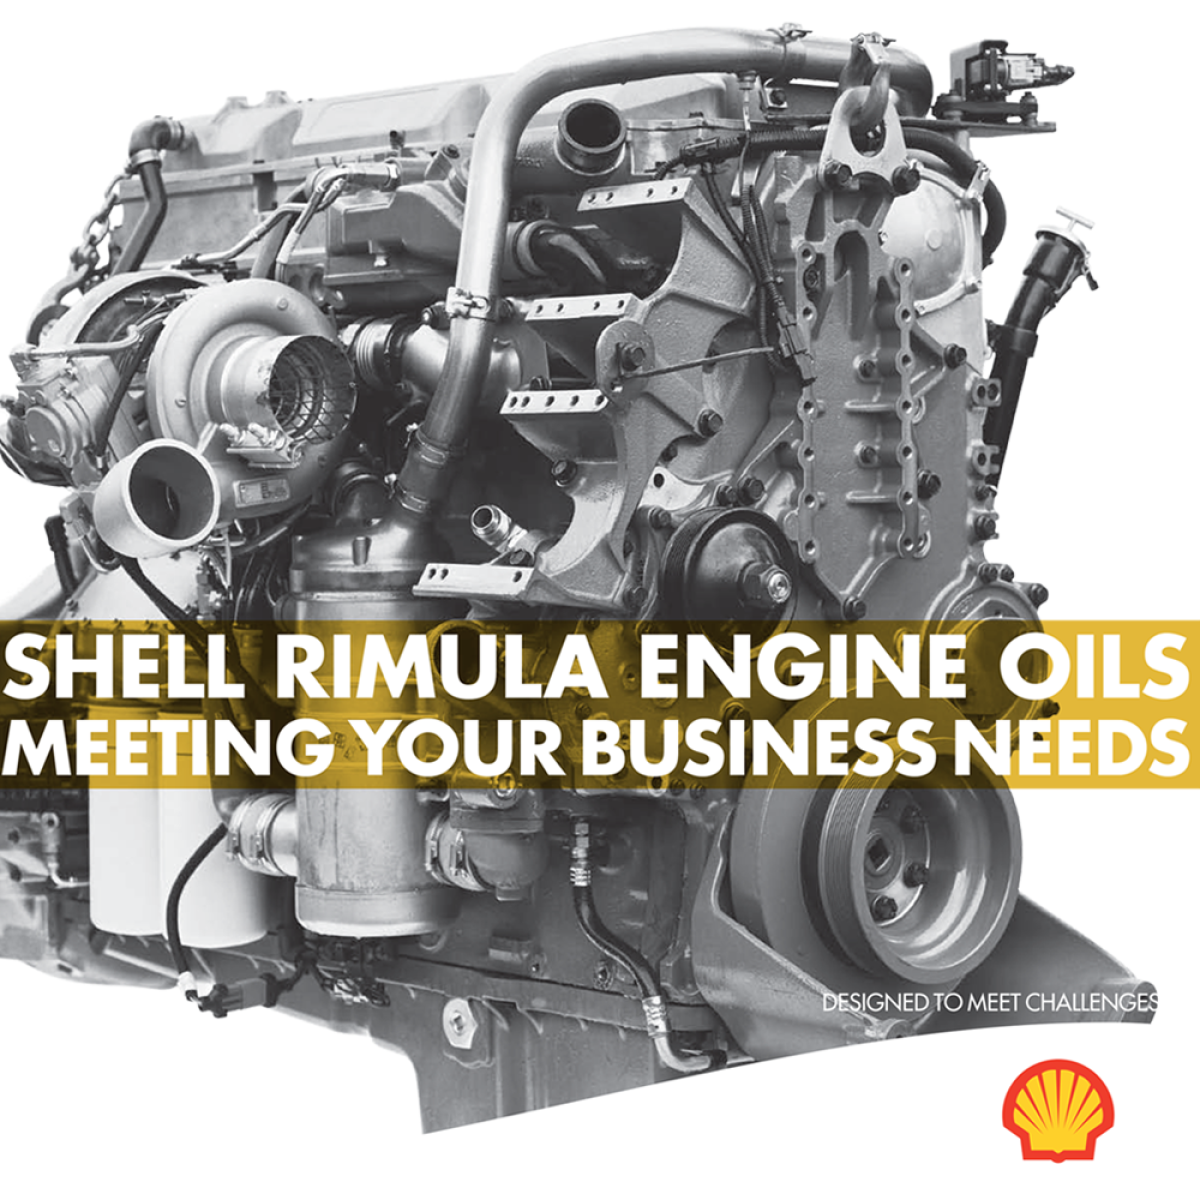 Shell Rimula R6 LM